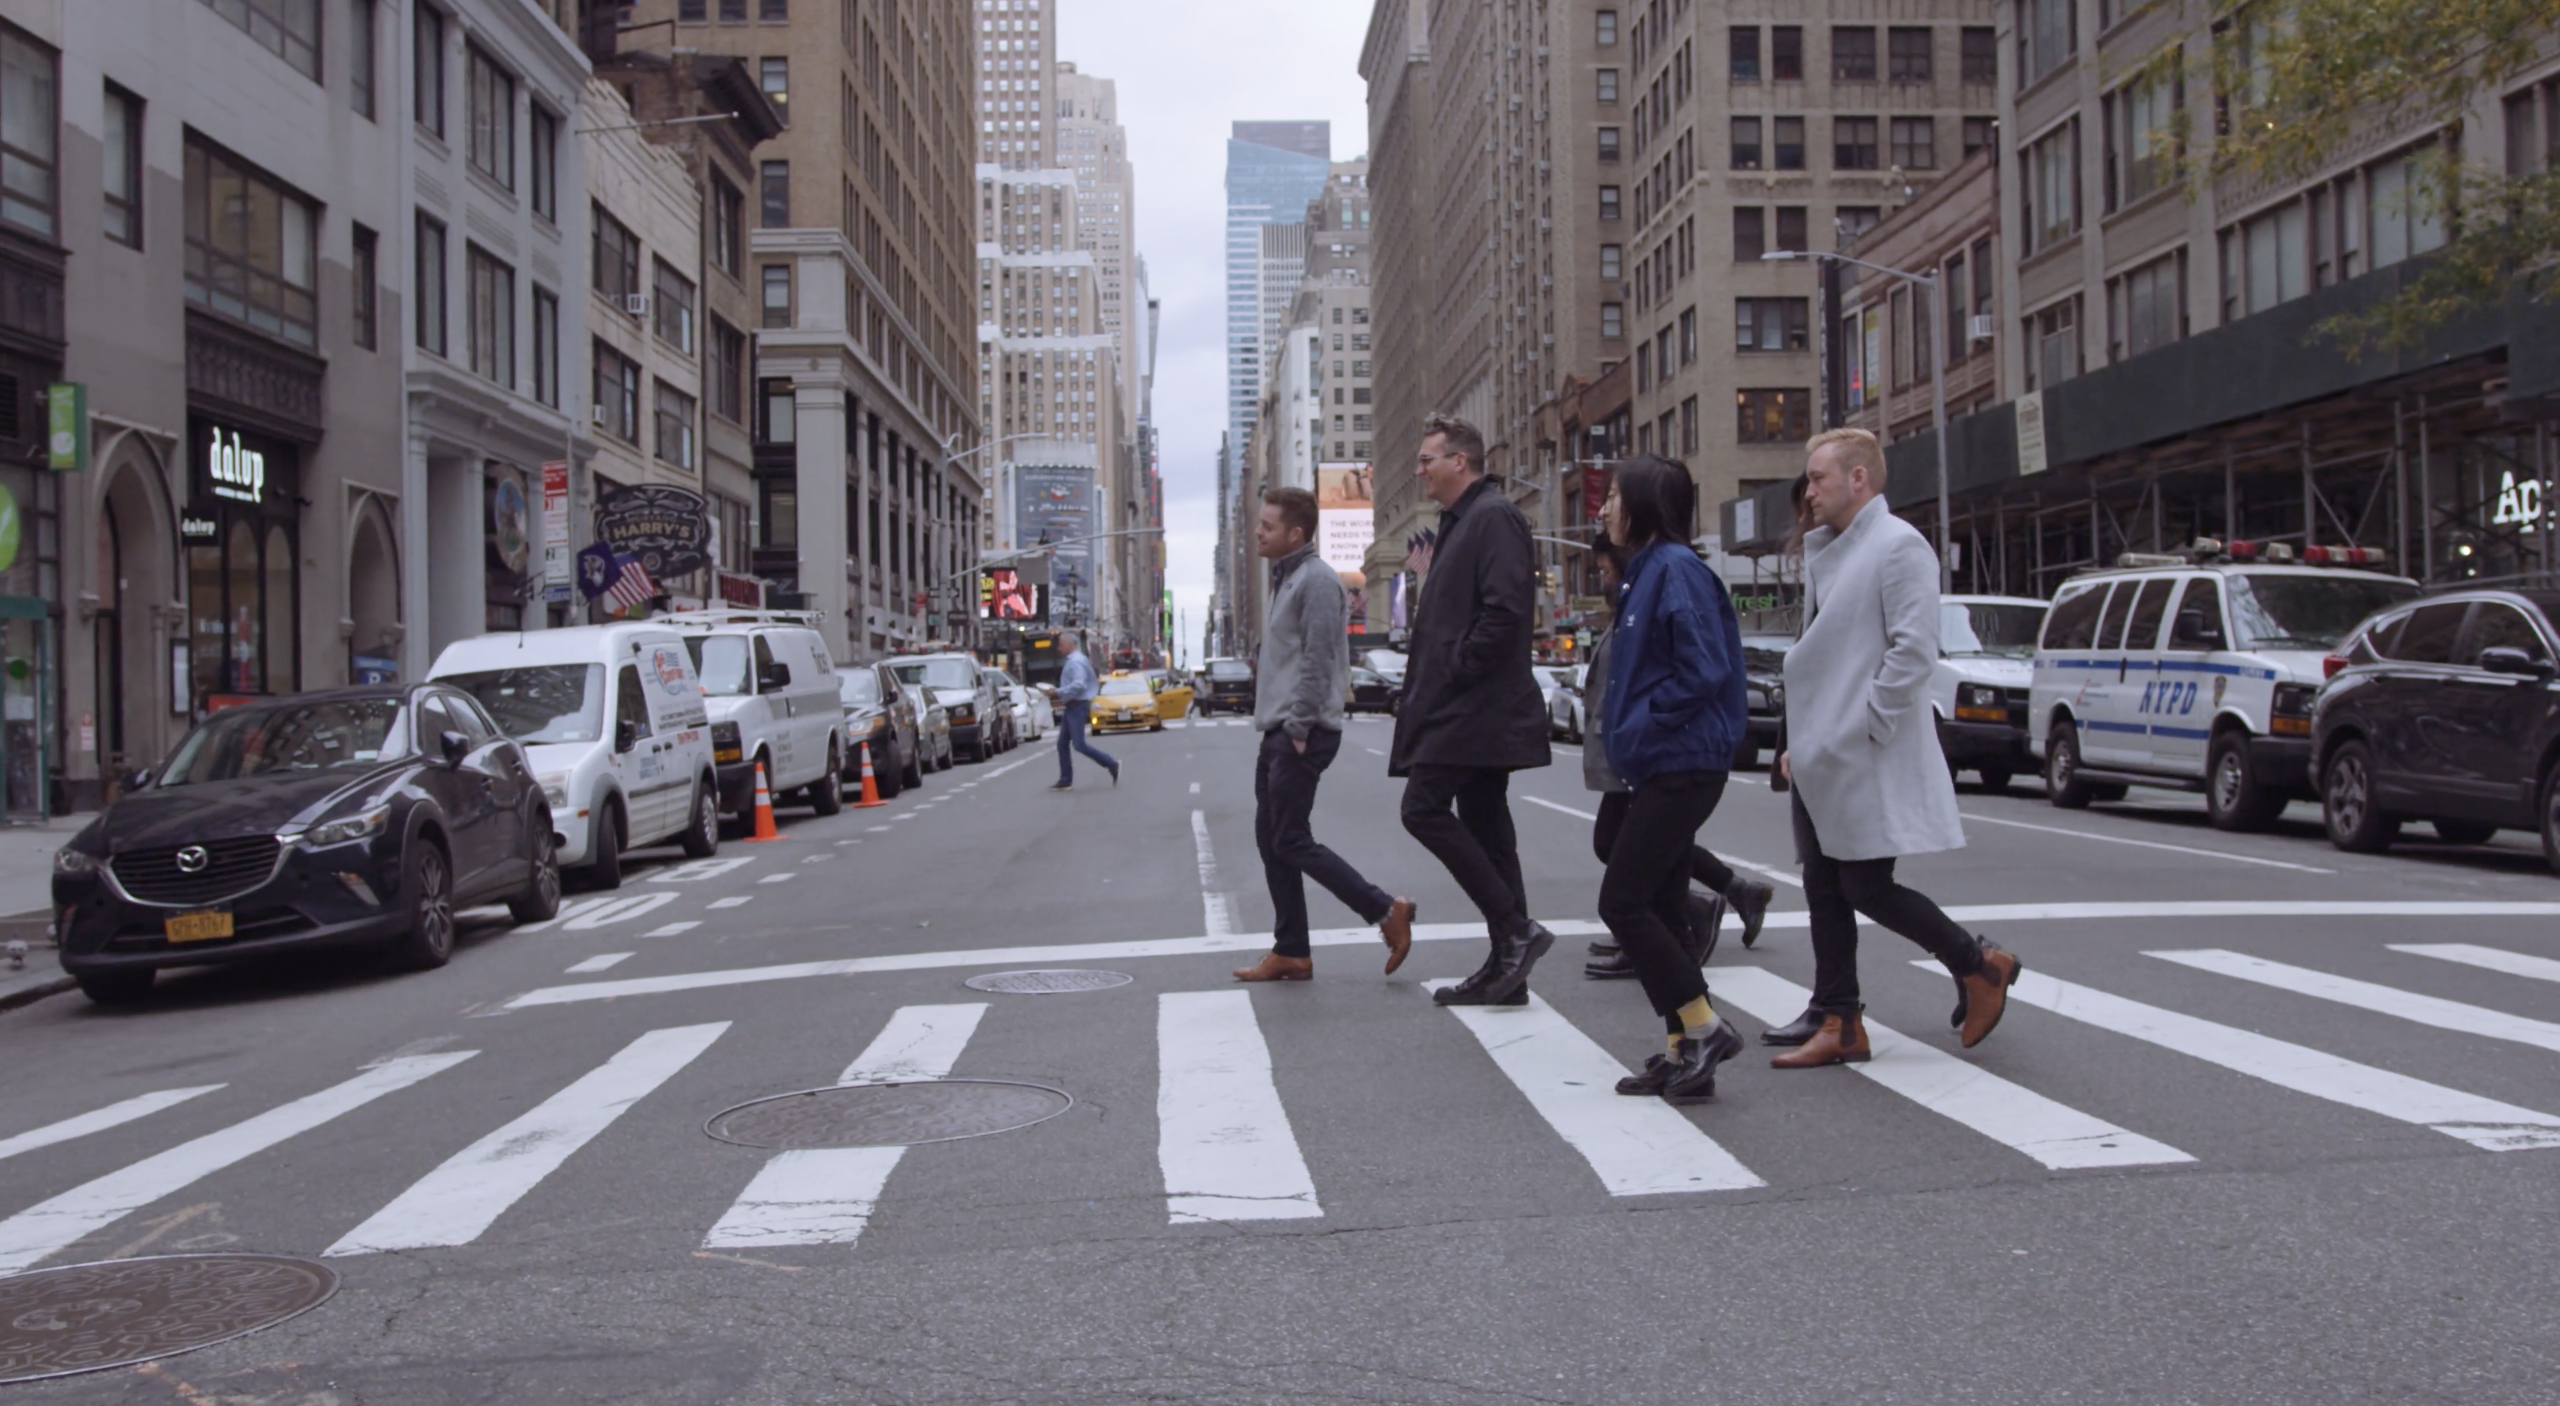 EDSA Design Studio NYC Three men and two women walking across a city street on a crosswalk